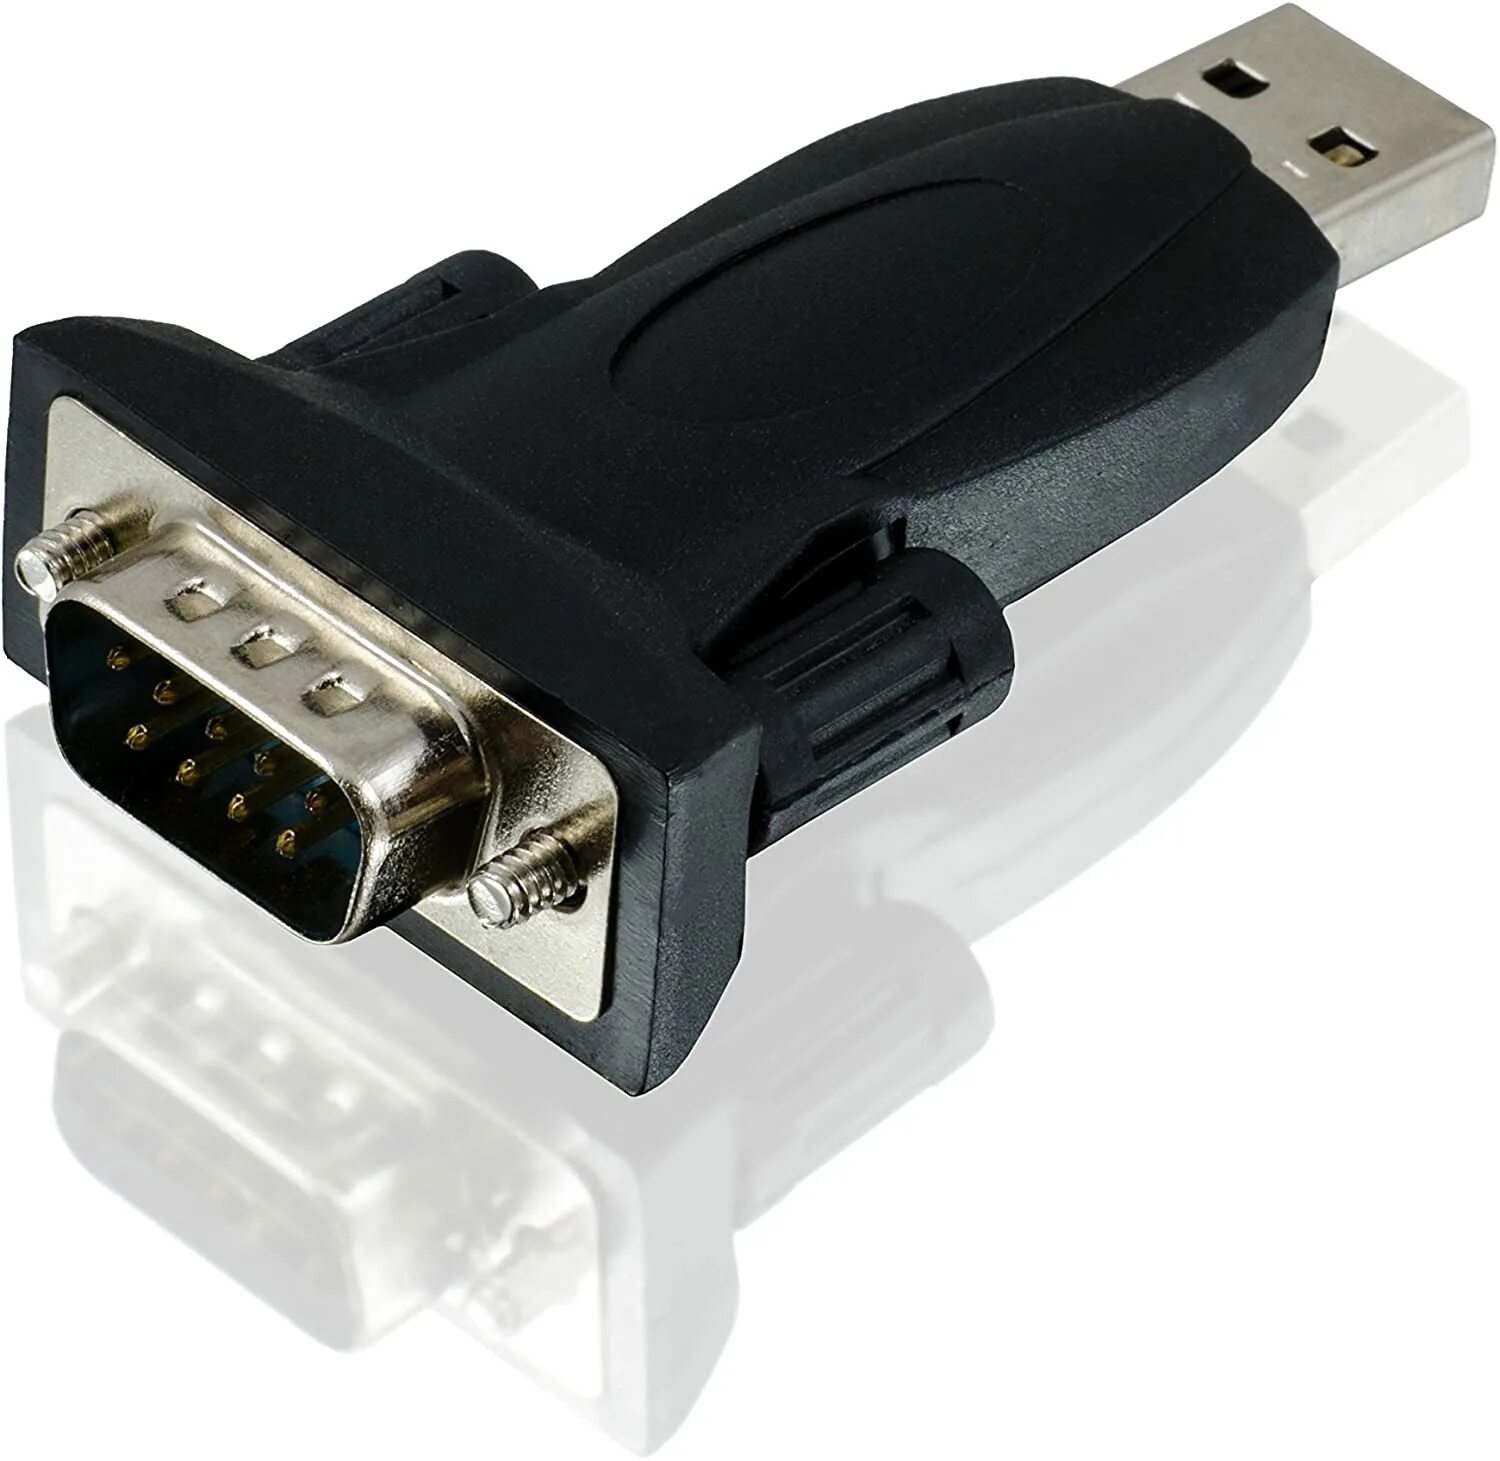 Адаптер USB-rs232. USB-rs232 prolific pl-2303. Переходник 232 мама на юсб. USB com rs232 переходник Hama.